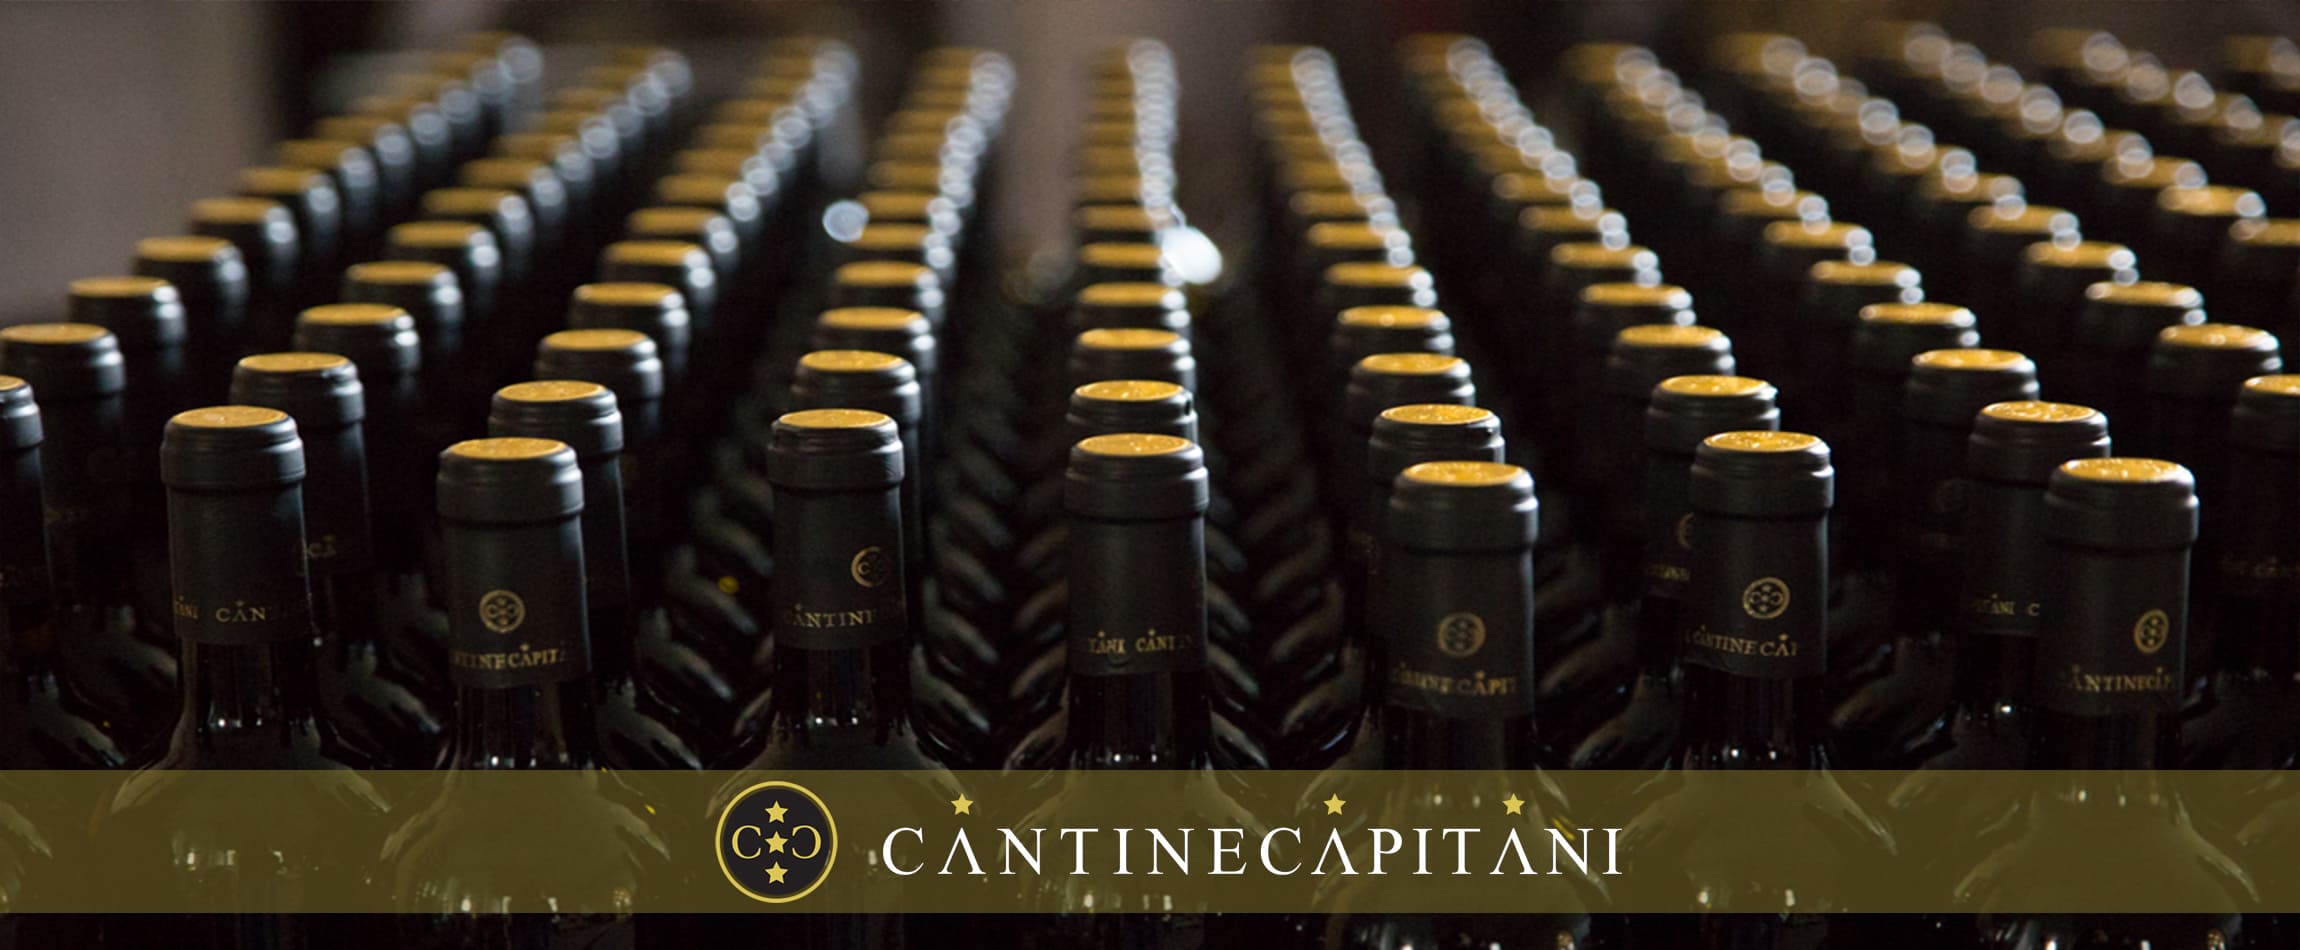 export-cantine-capitani